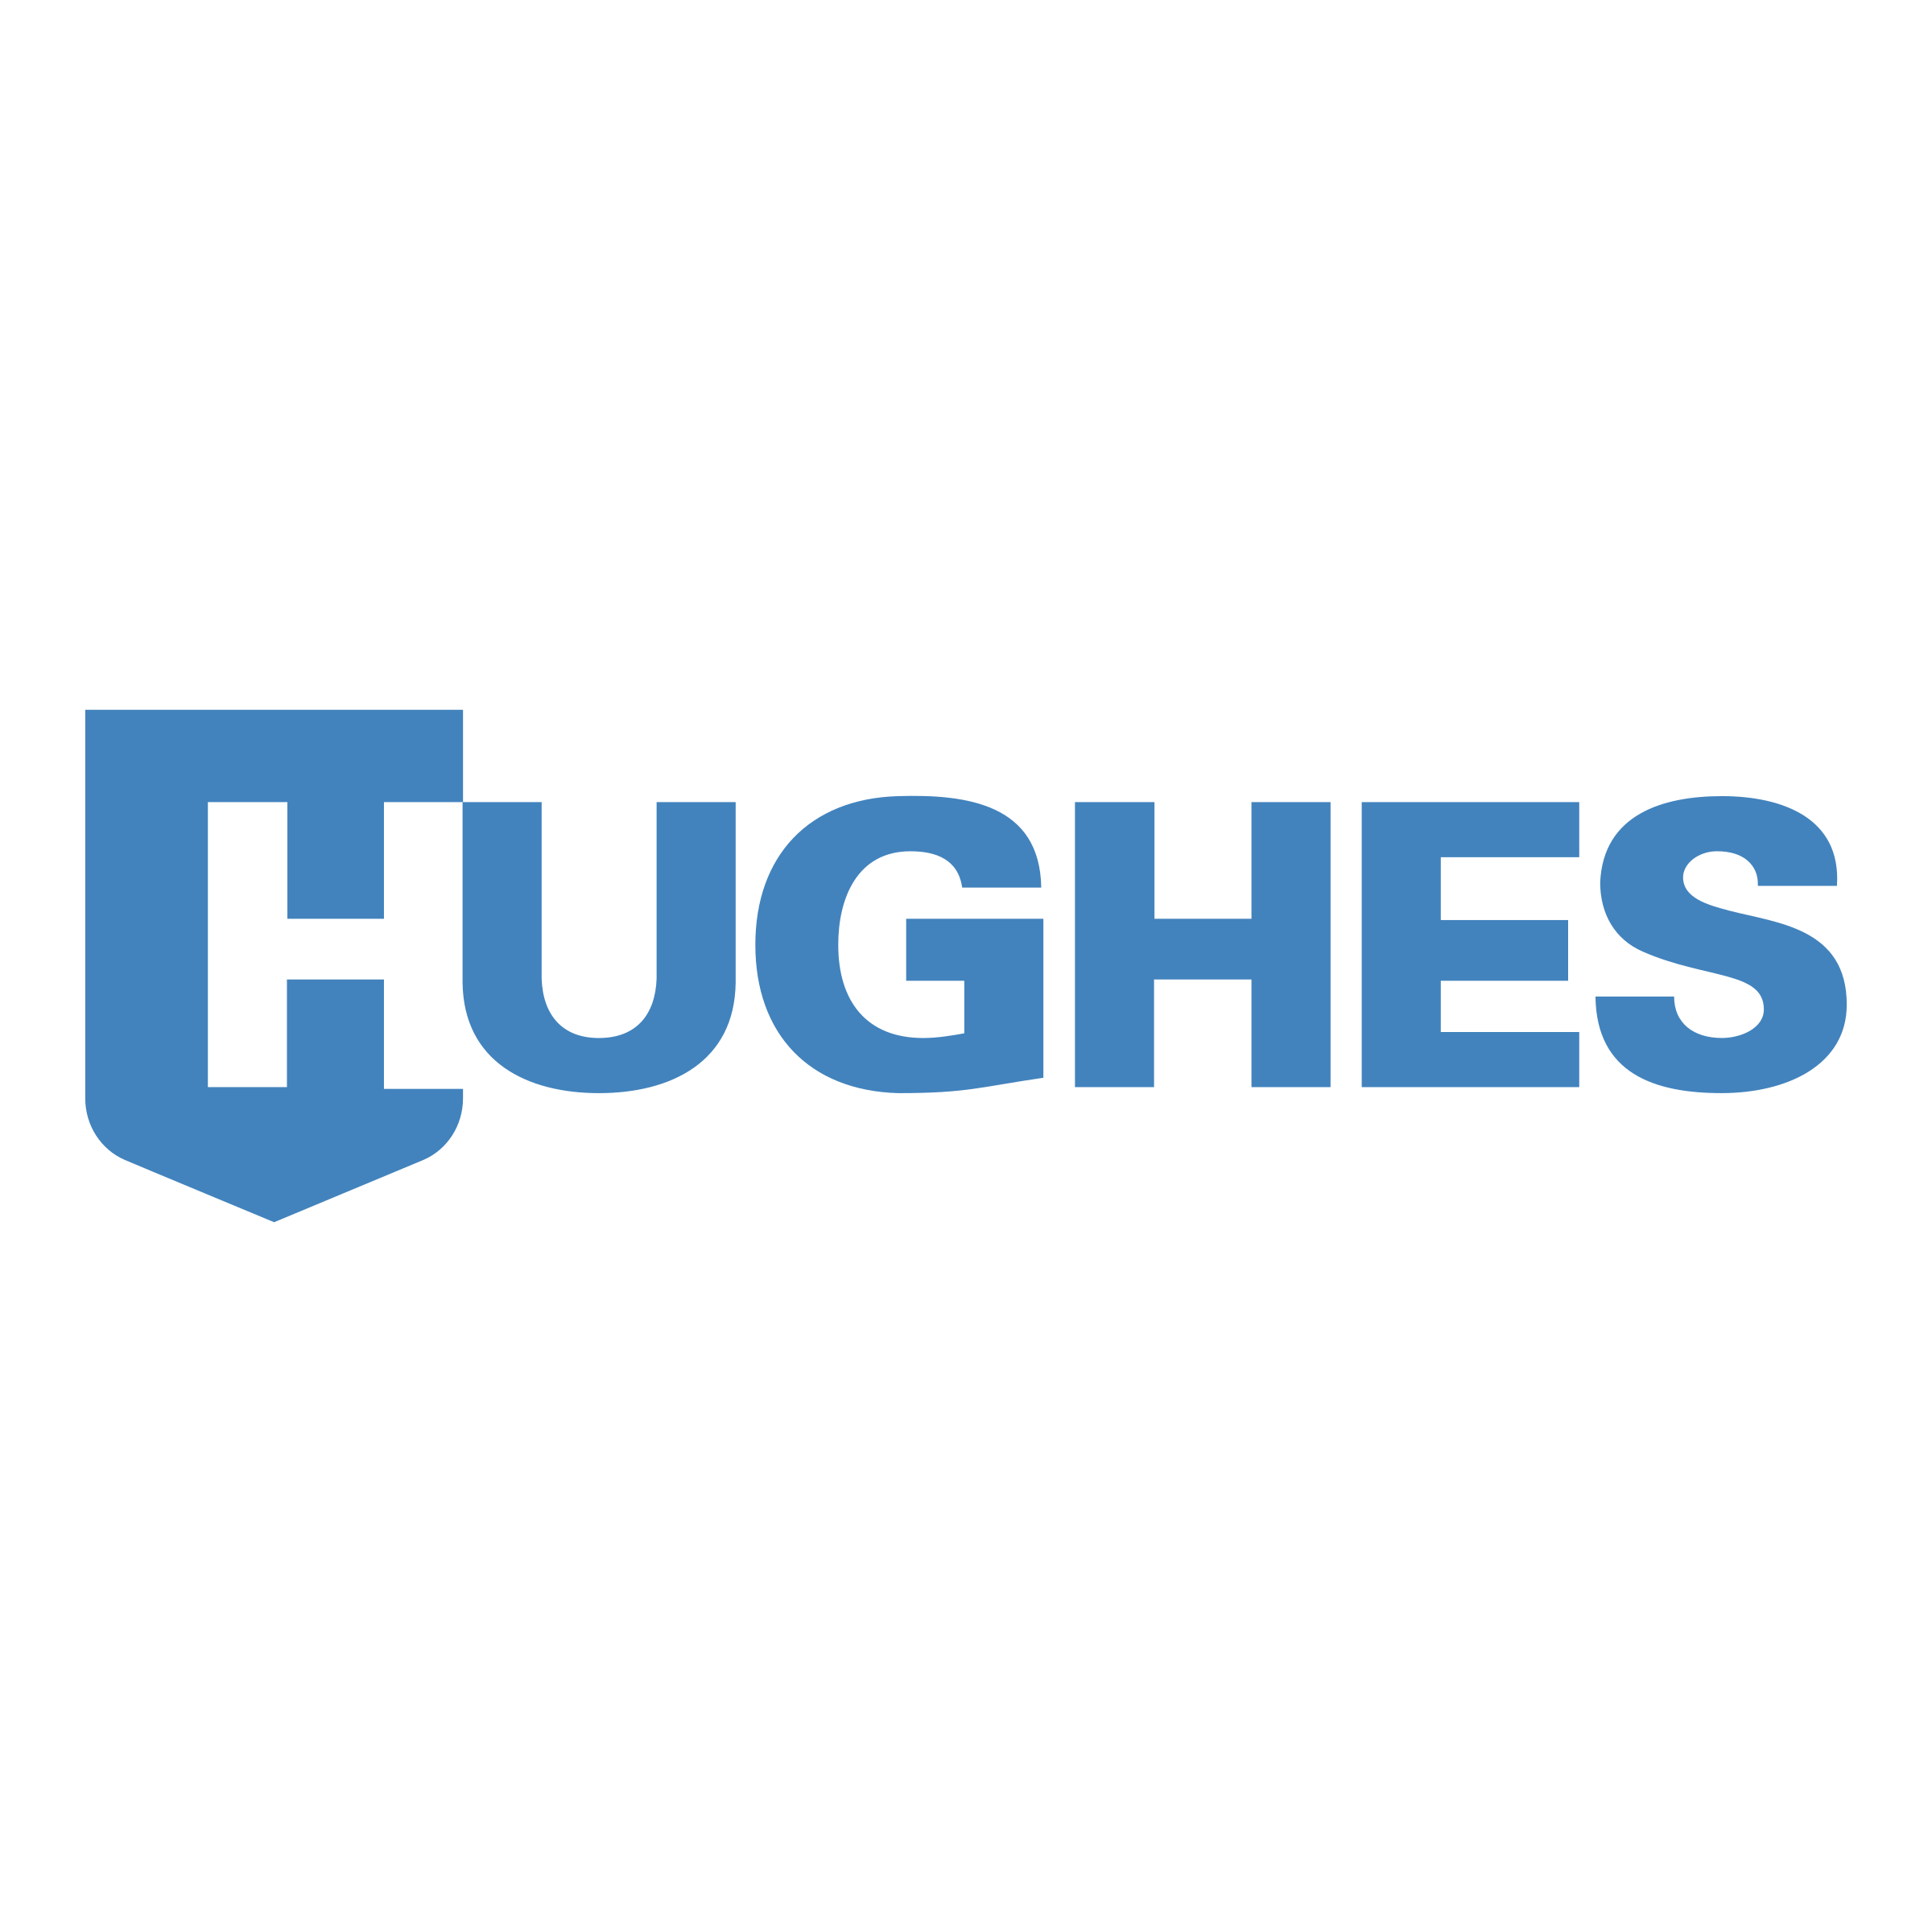 Hughes Logo - Hughes Supply Logo PNG Transparent & SVG Vector - Freebie Supply